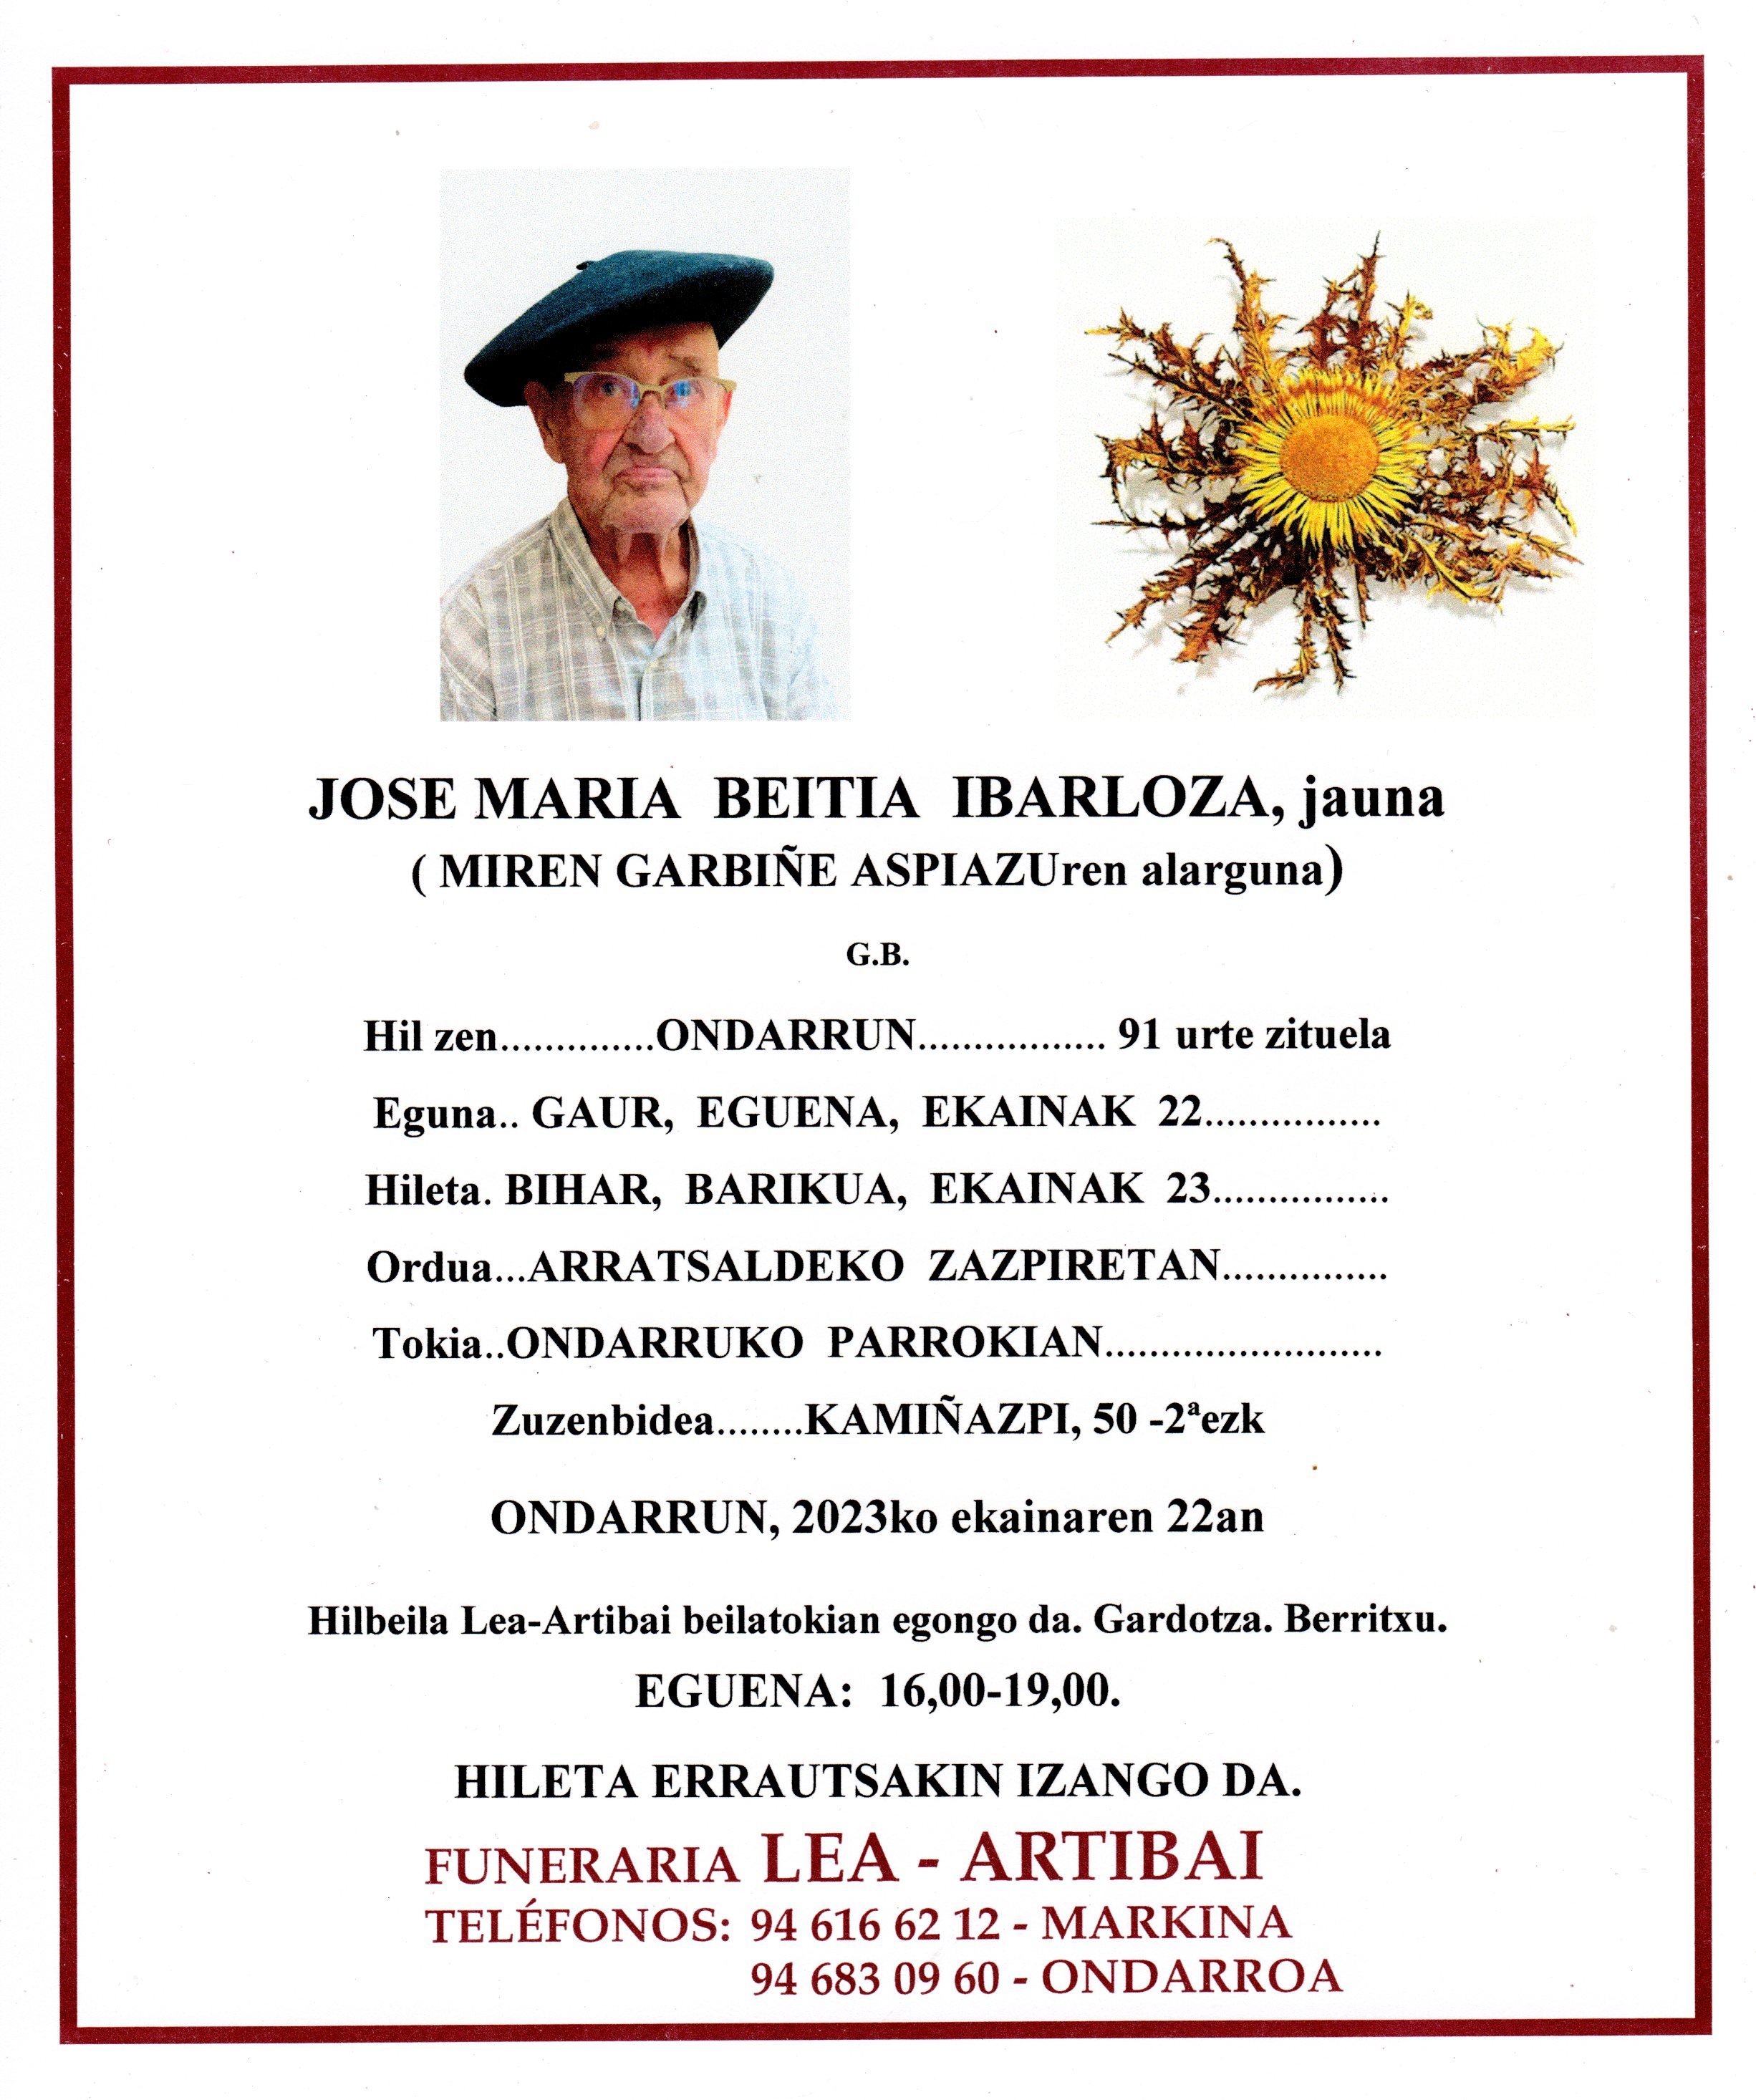 Jose Maria Beitia Ibarloza